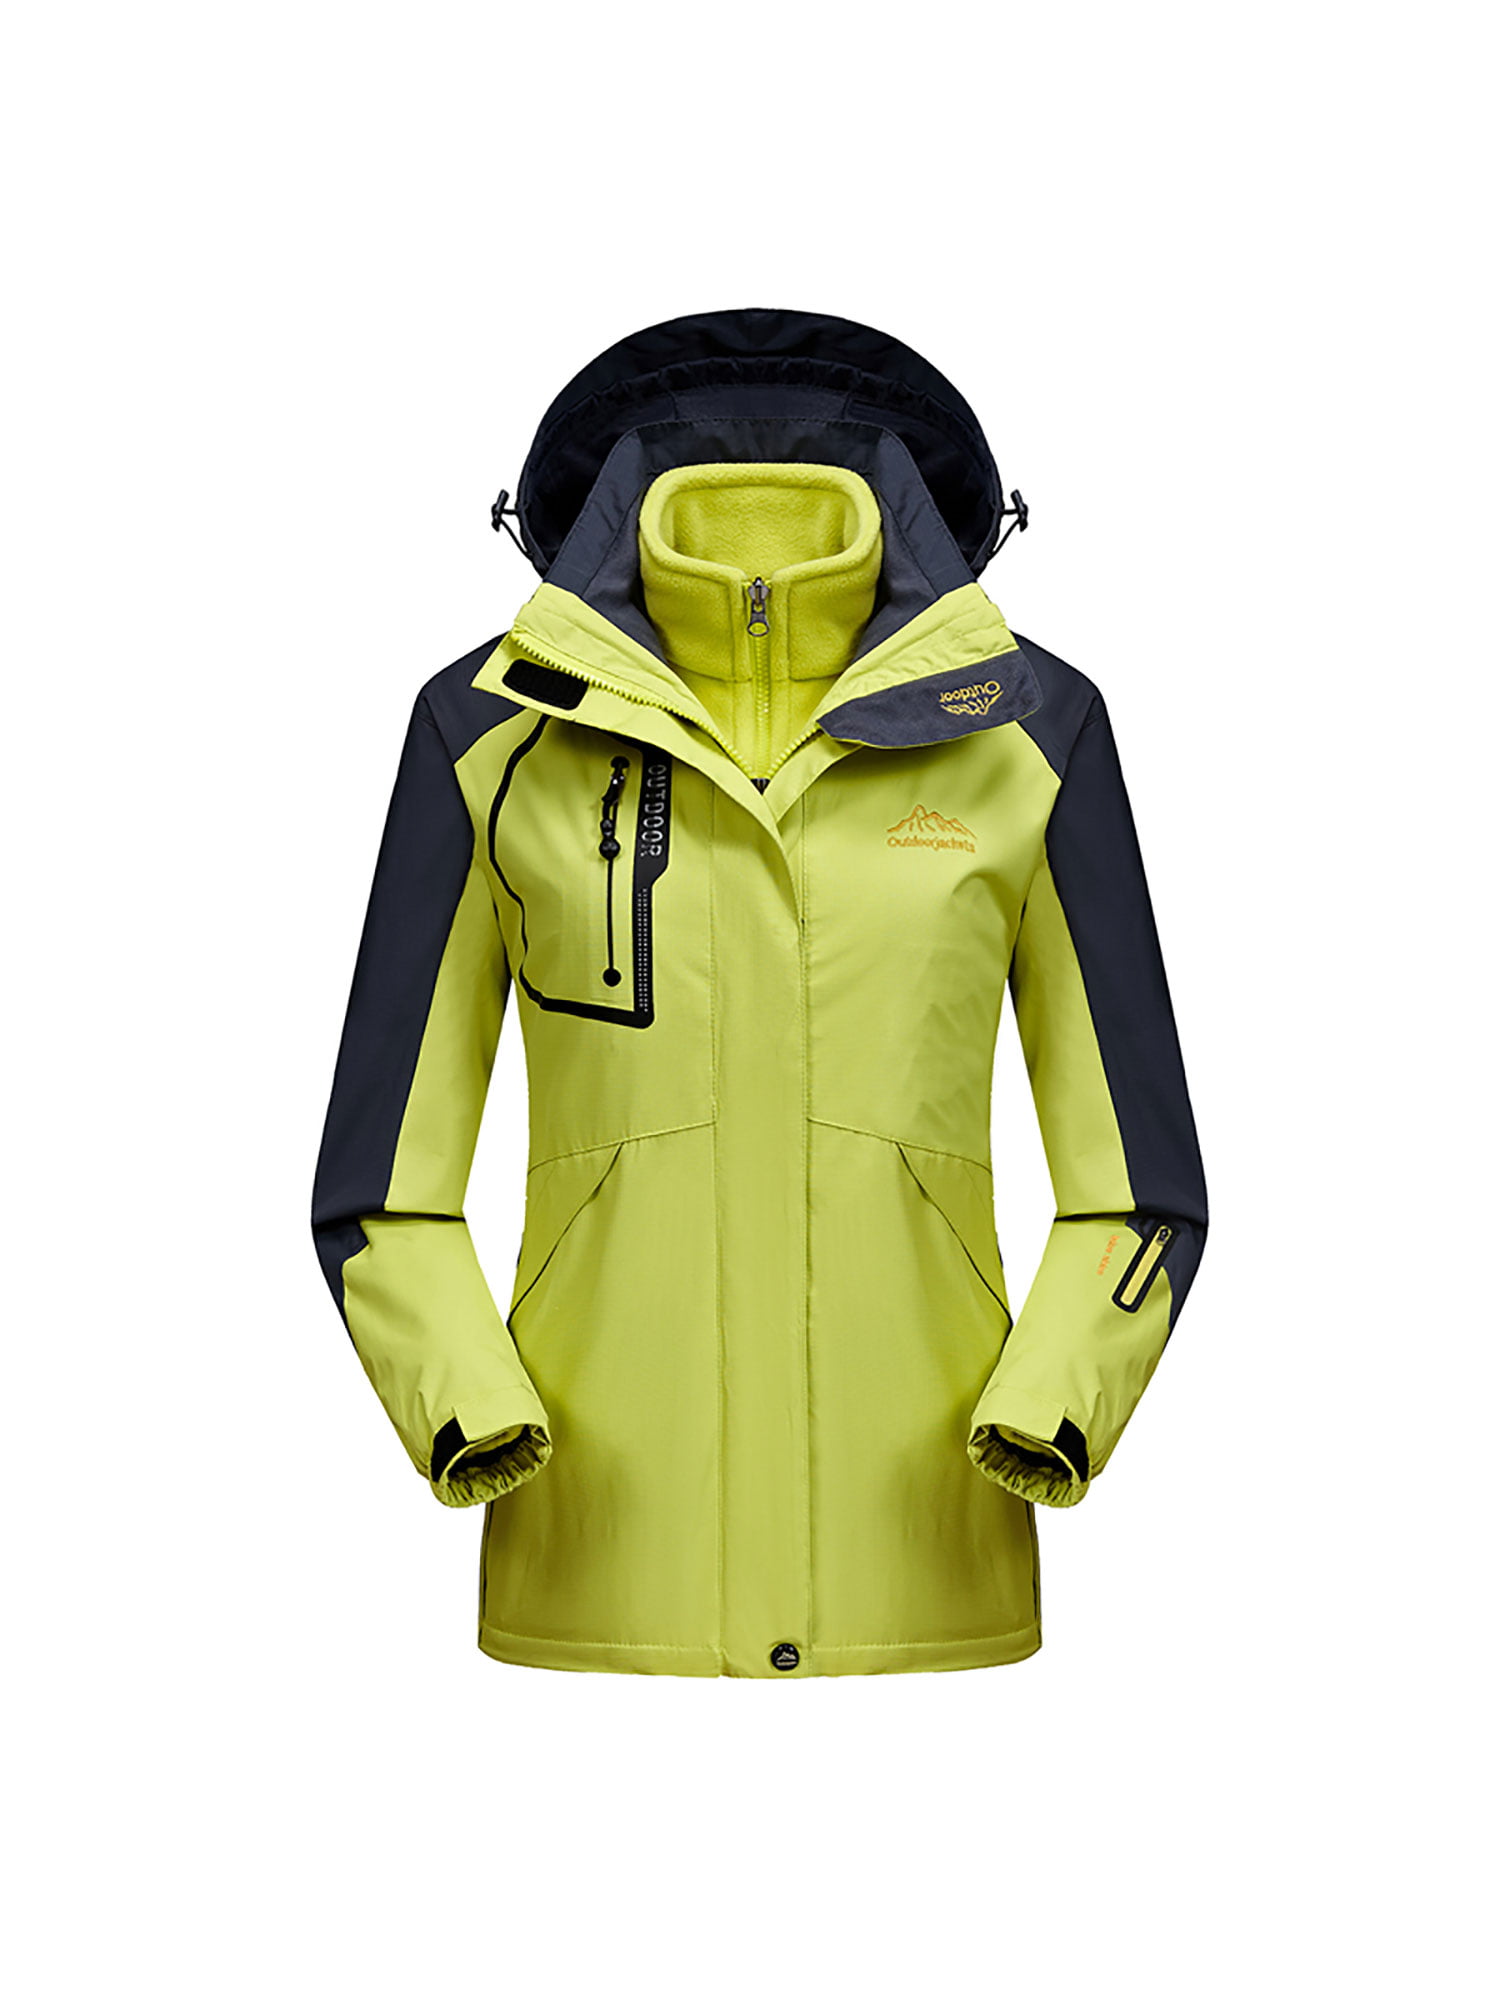 Women’s Hooded Winter Snow Ski Rain Jacket Green Medium Waterproof Windproof Softshell Fleece Coat Outdoor Multi-Pockets Winter Coats for Camping,Hiking & Casual Daily